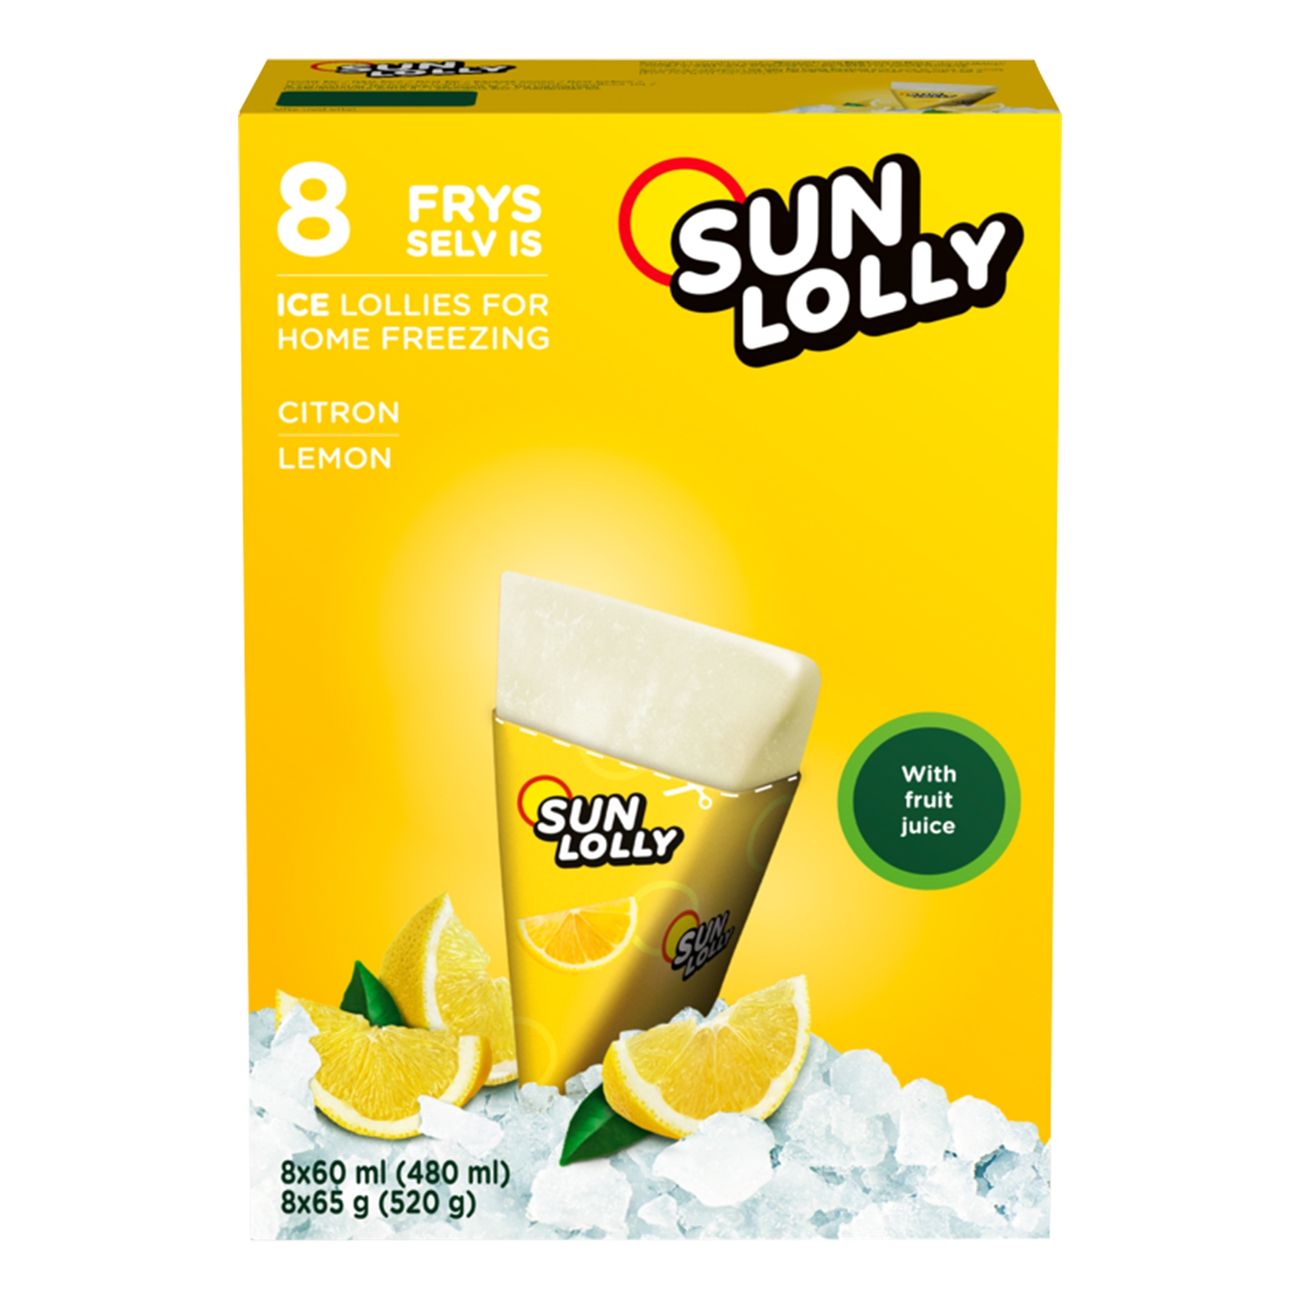 sun-lolly-citron-isglass-93685-1